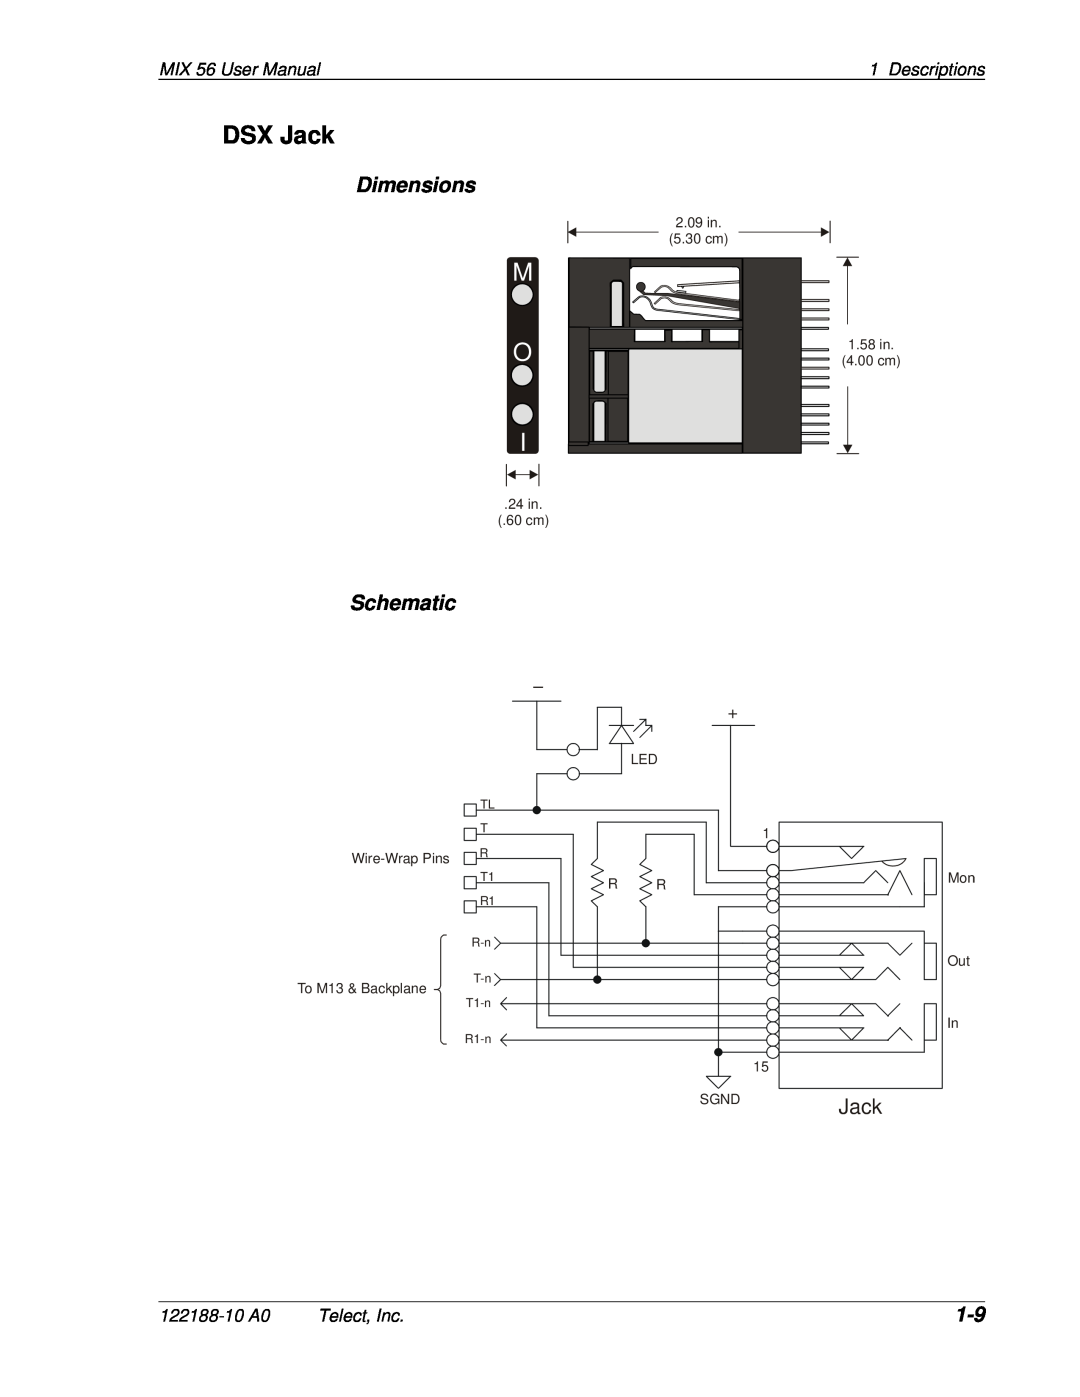 Telect DSX Jack, Schematic, M O I, Dimensions, MIX 56 User Manual, Descriptions, 122188-10 A0, Telect, Inc, 24 in 60 cm 